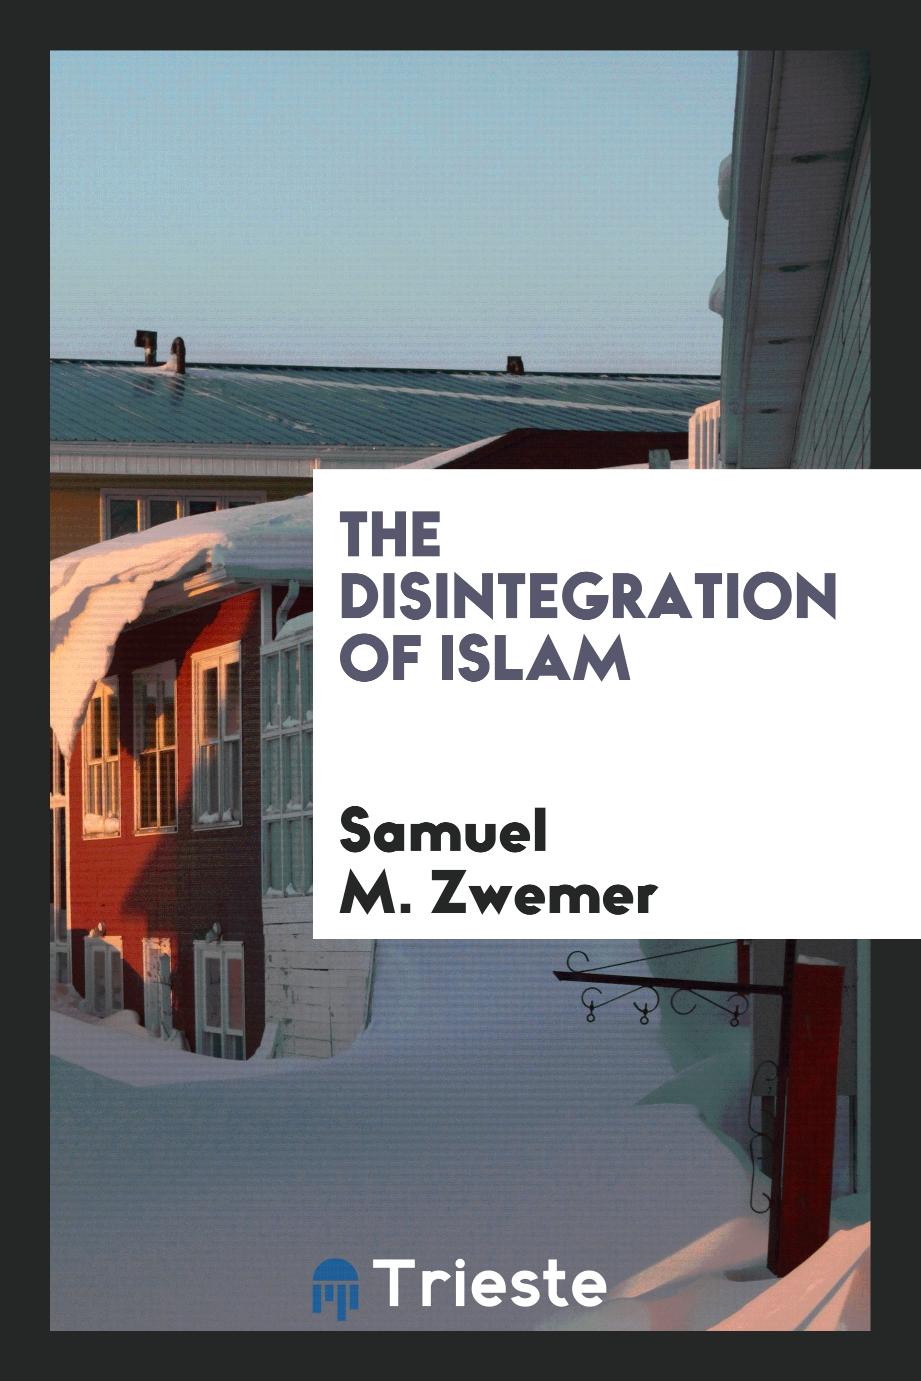 The disintegration of Islam